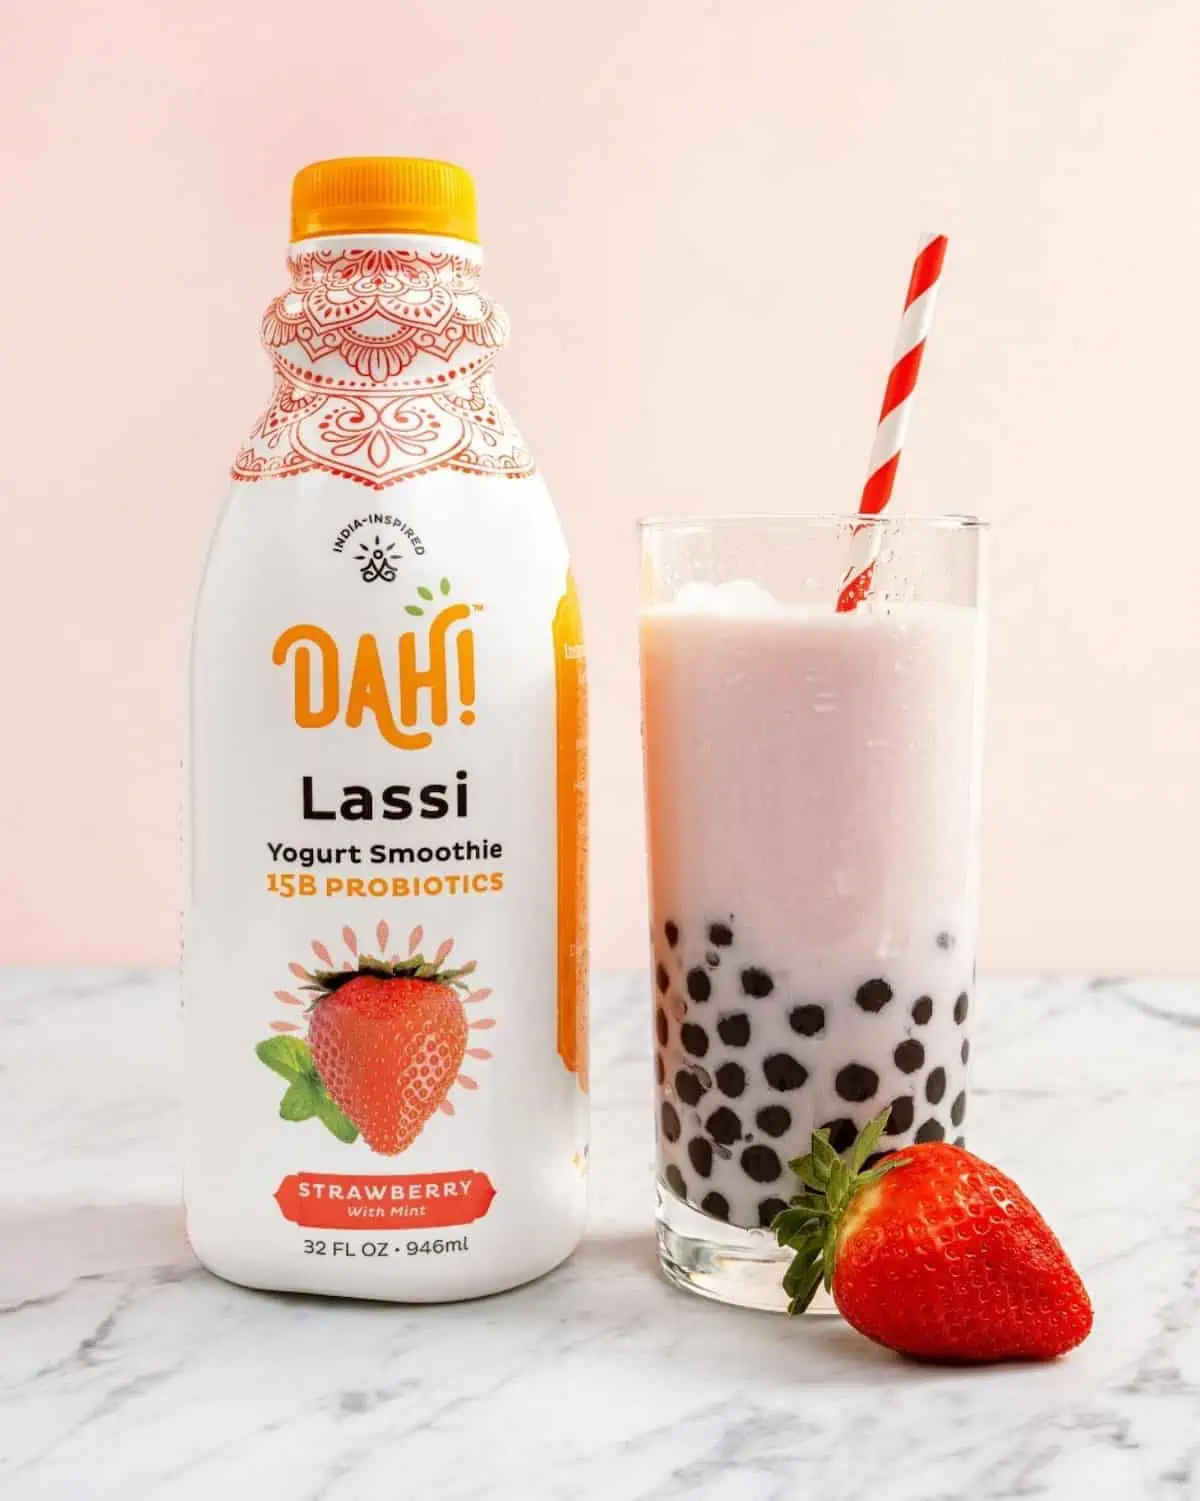 A vegan yogurt smoothie made with Dah! brand lassi.